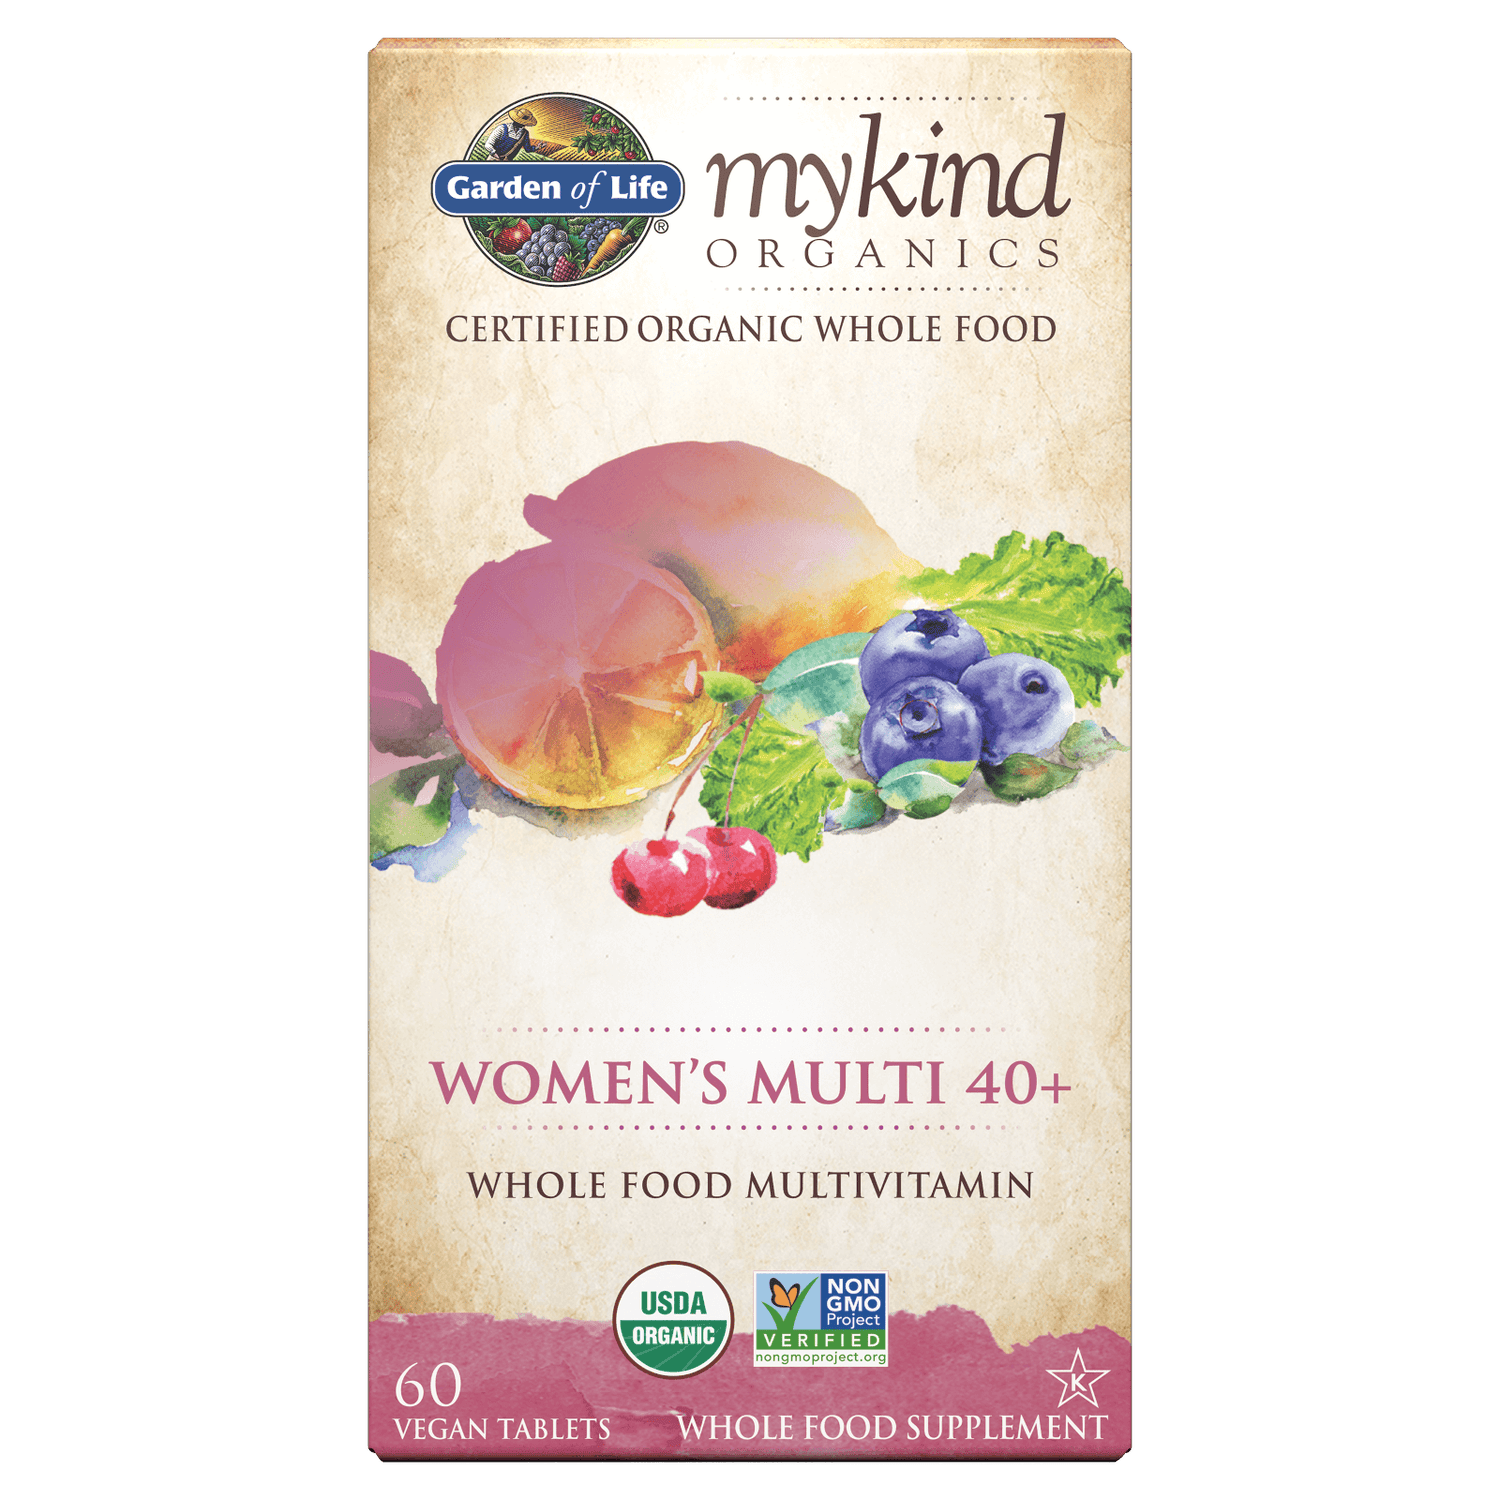 mykind Organics Мультивитаминный комплекс для женщин 40+ - 60 таблеток